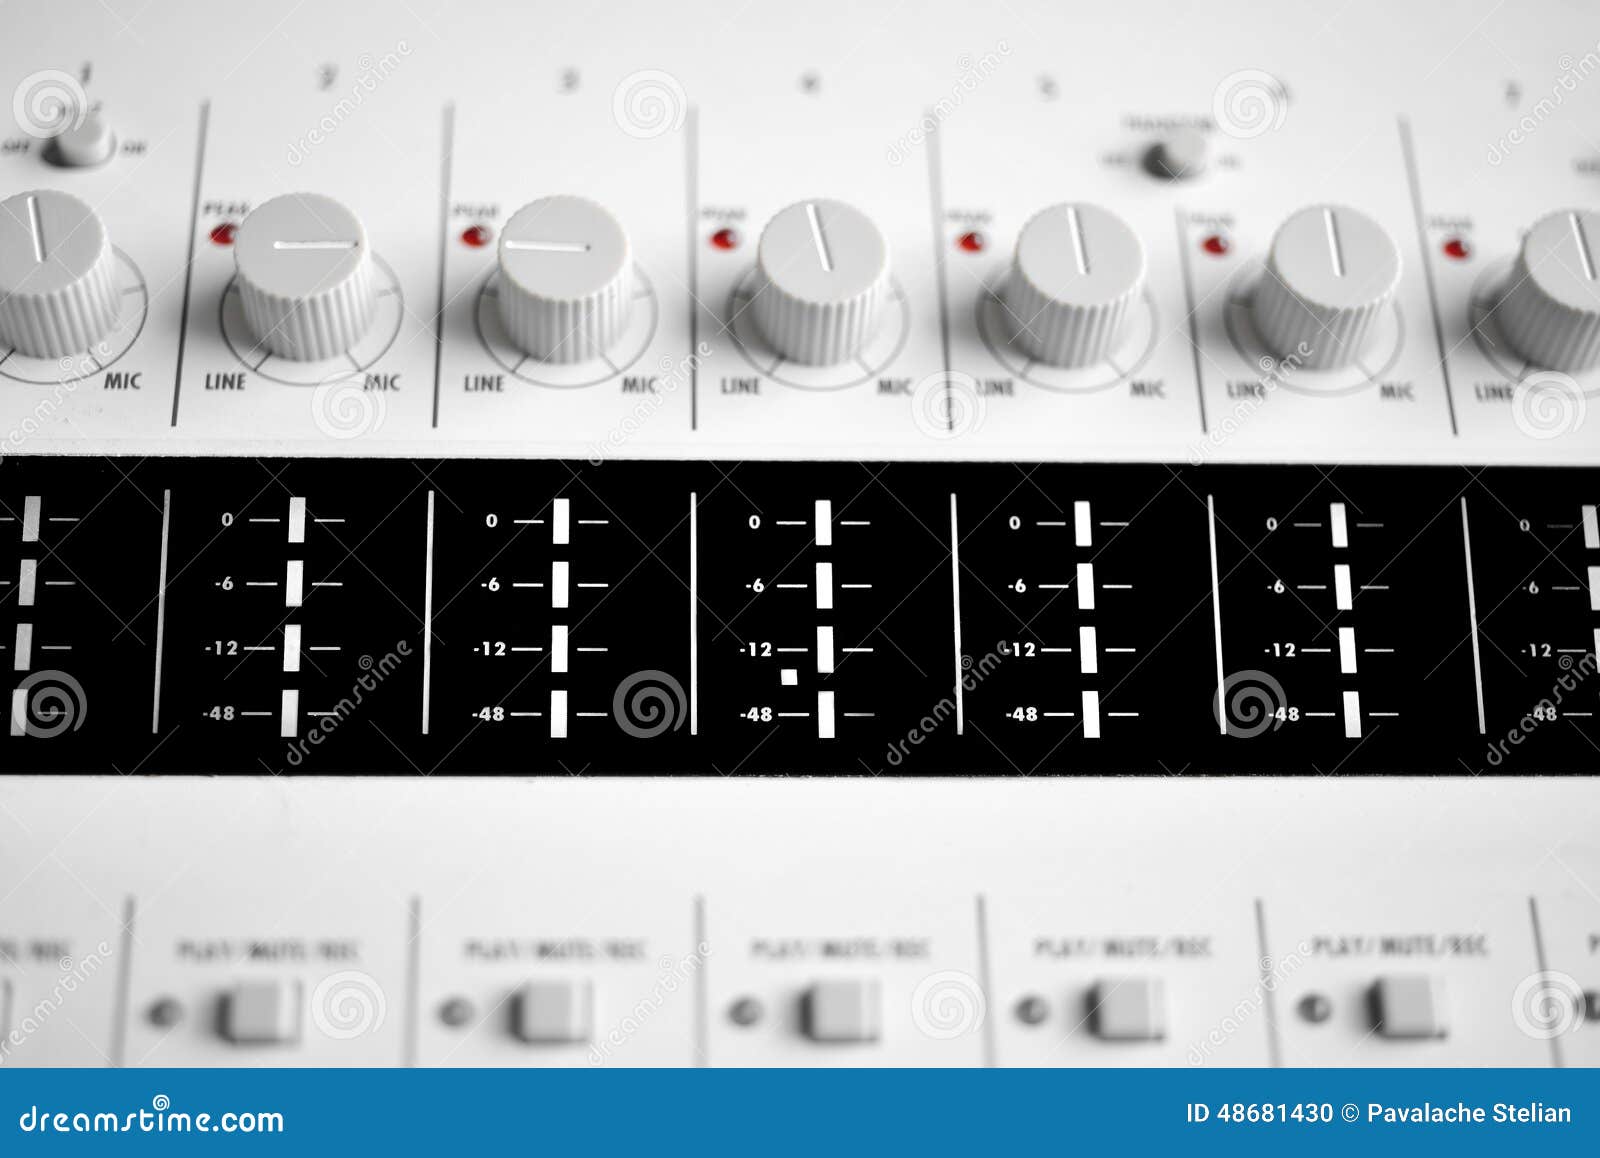 close up of a sound mixer knobs